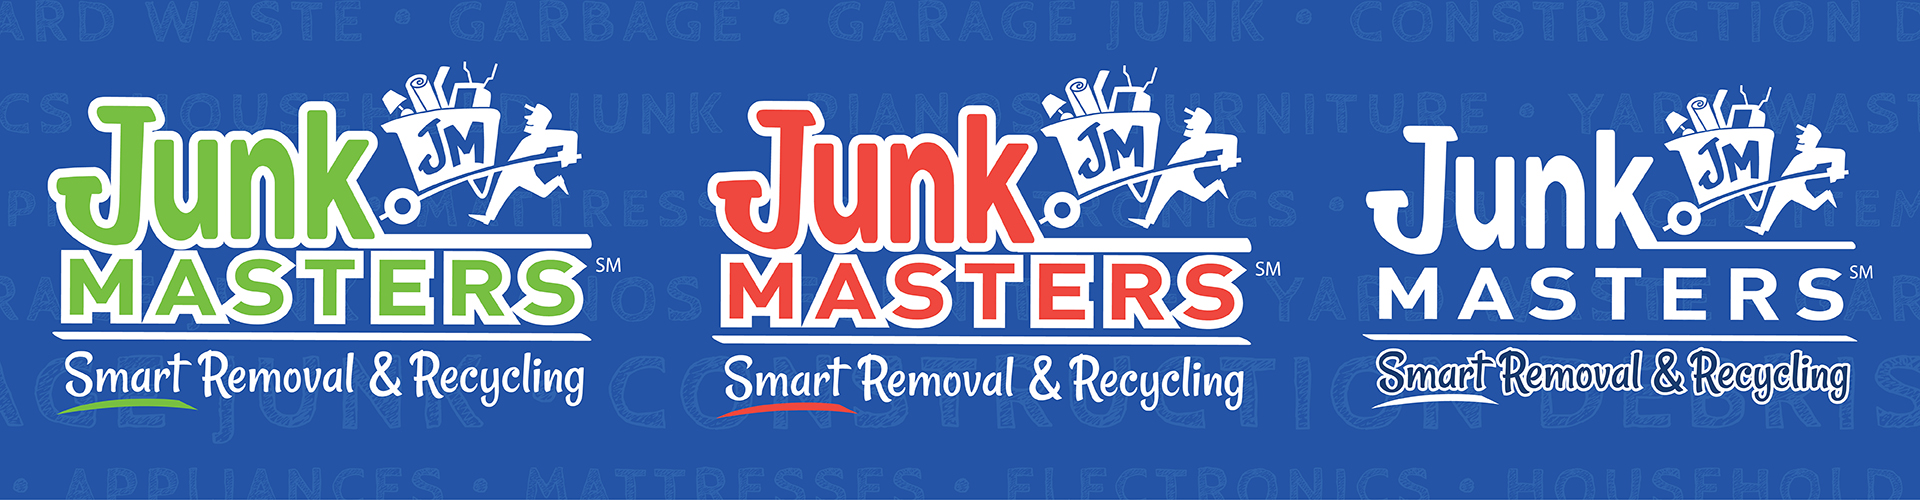 Junk Masters Logo Color Variations